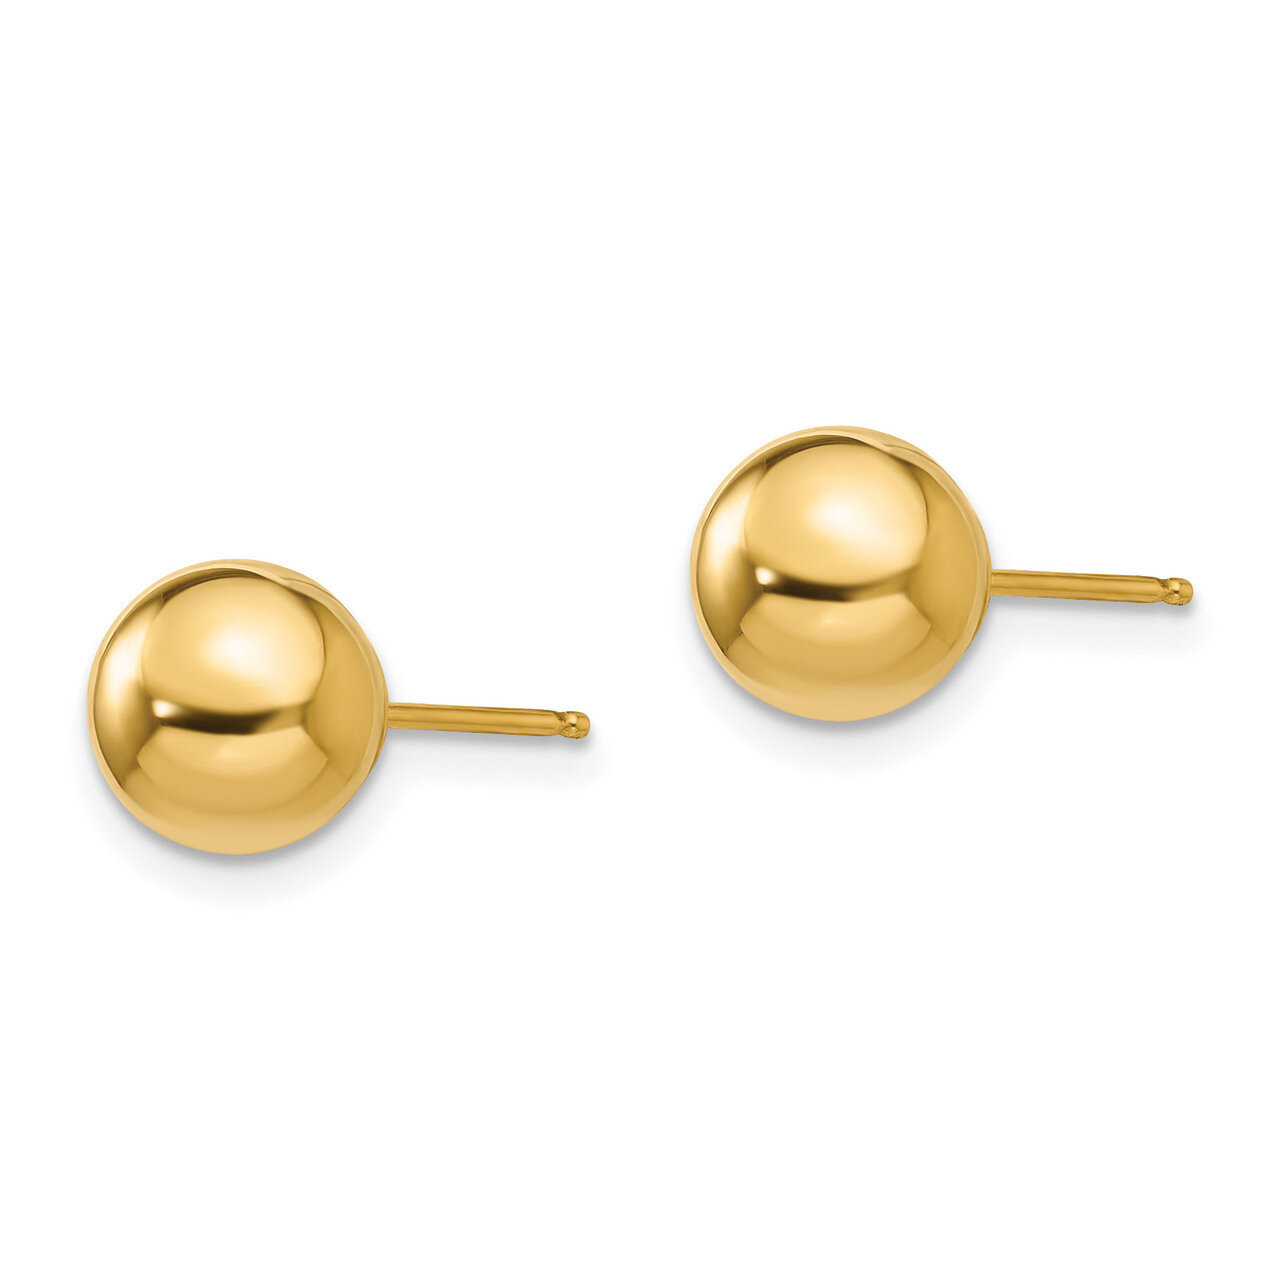 Polished 7mm Ball Post Earrings - 14k Gold SE104